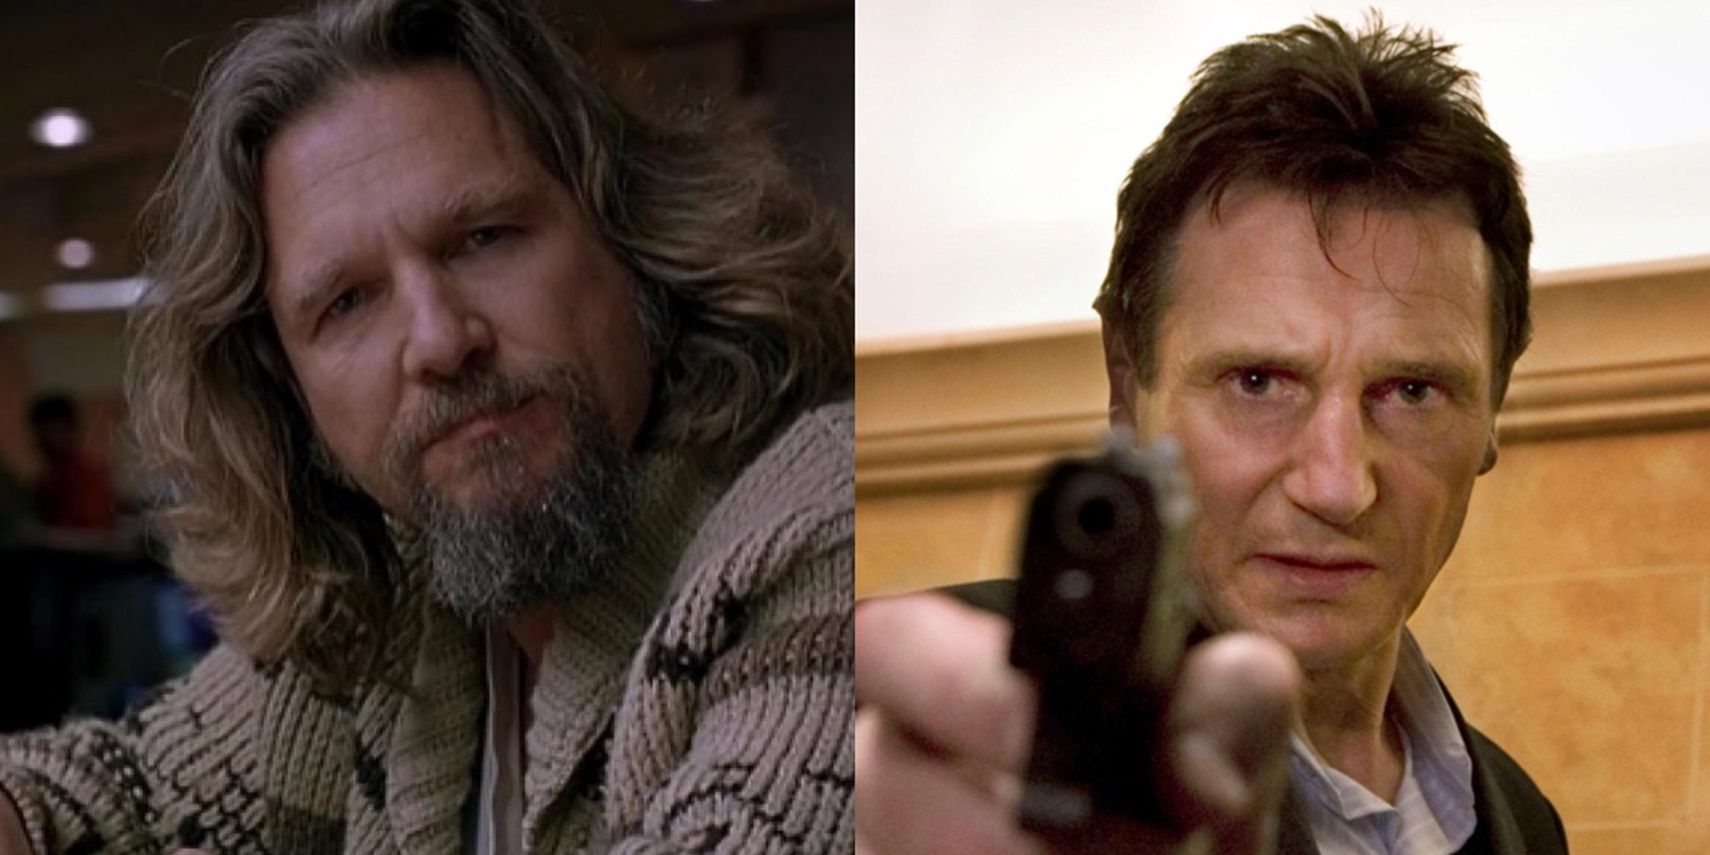 Jeff Bridges in The Big Lebowski and Liam Neeson in Taken